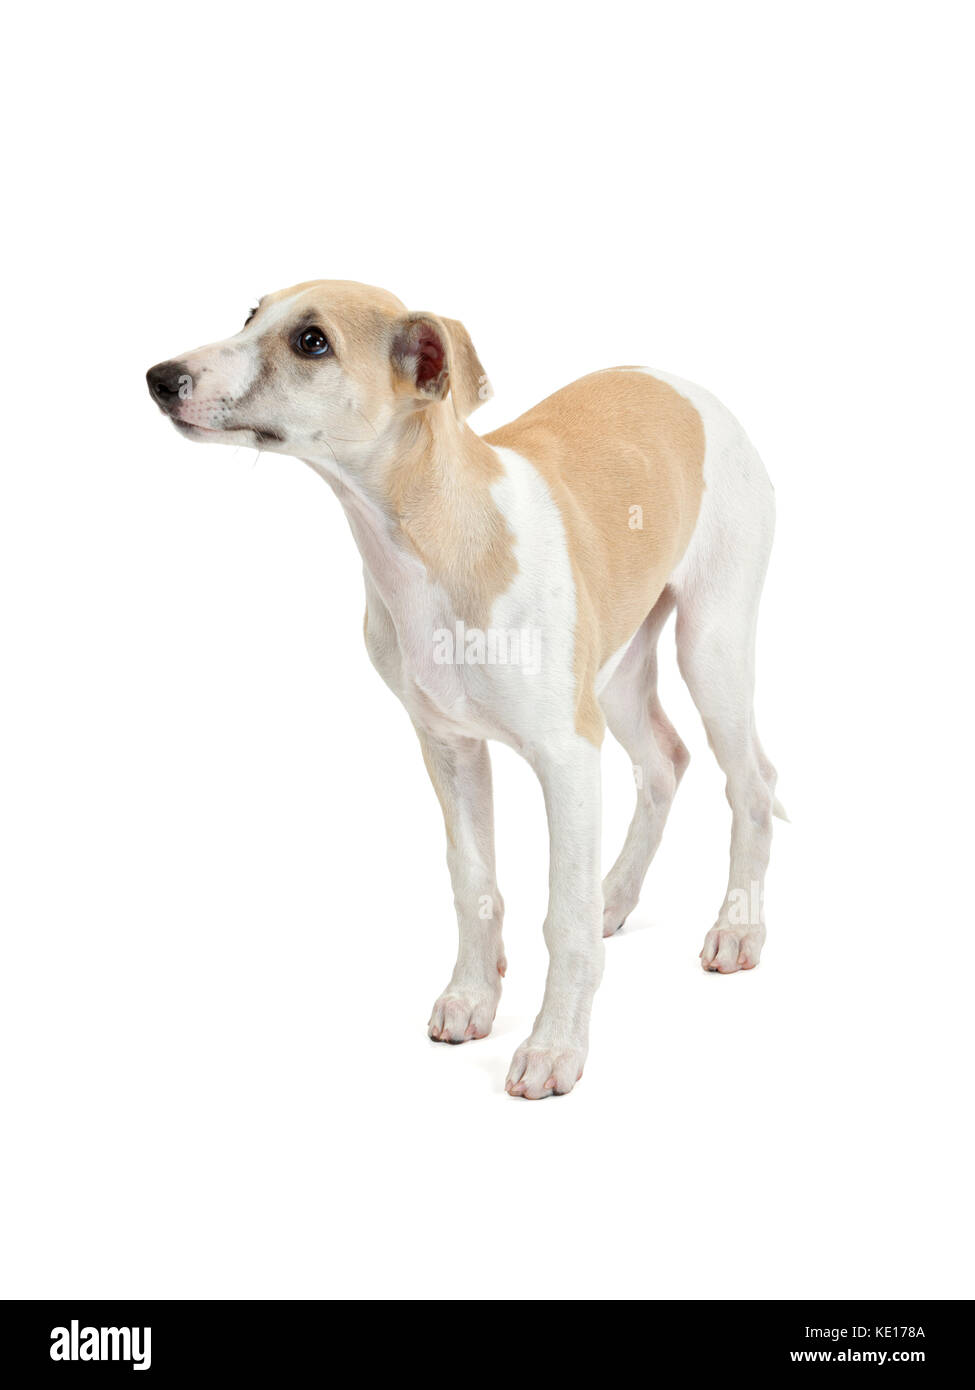 Cachorro whippet permanente foto de estudio sobre fondo blanco Fotografía stock - Alamy